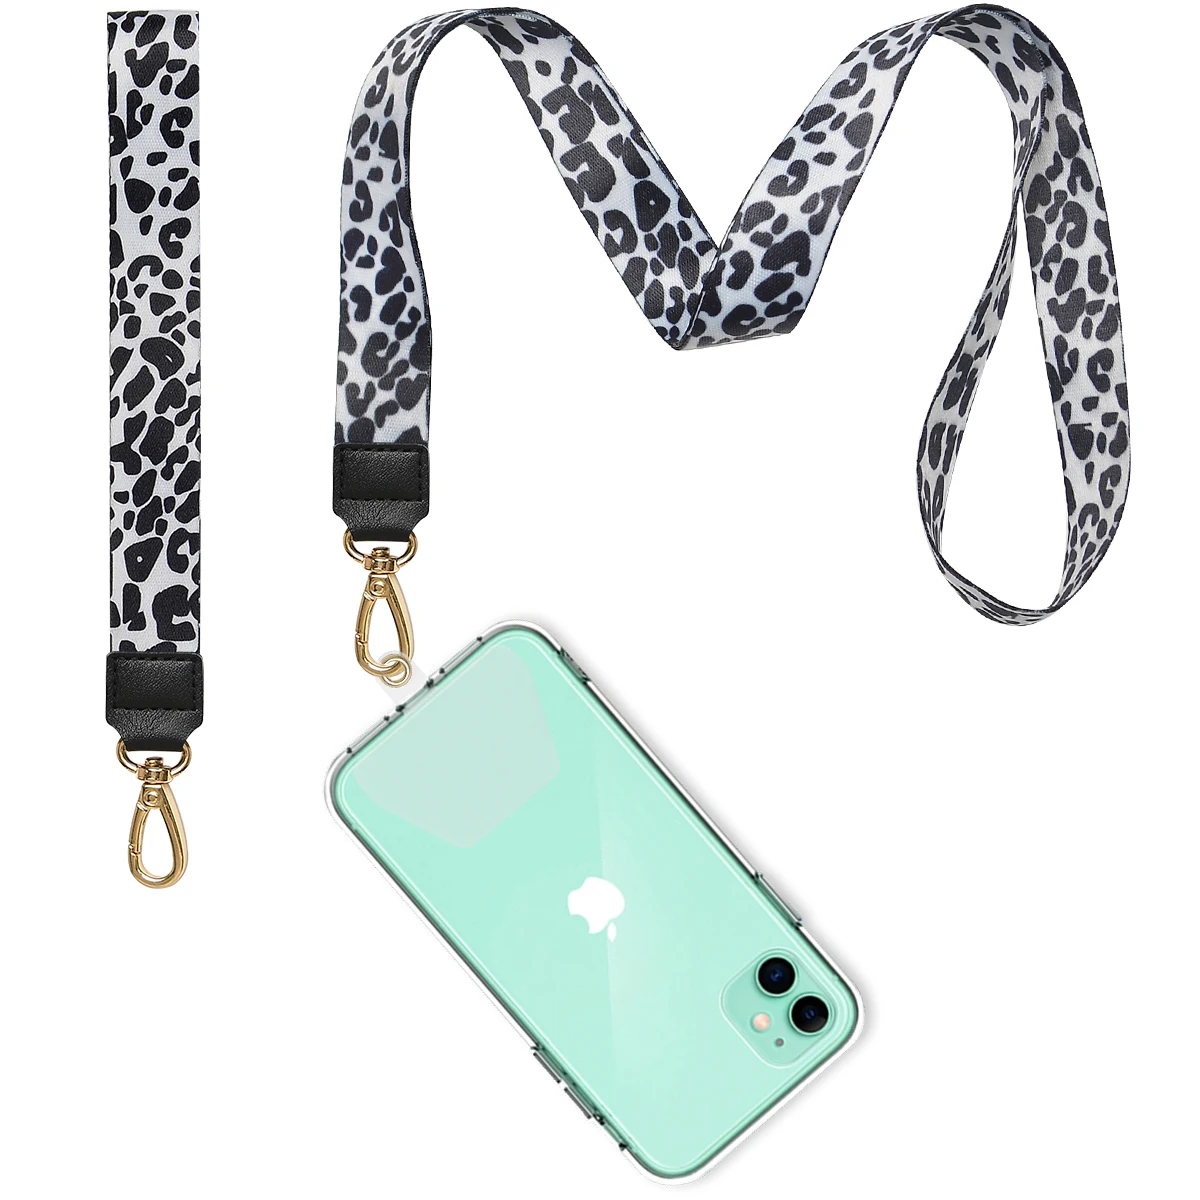 50 Pcs Moq Promotional Mobile Phone Neck Strap No Minimum Order